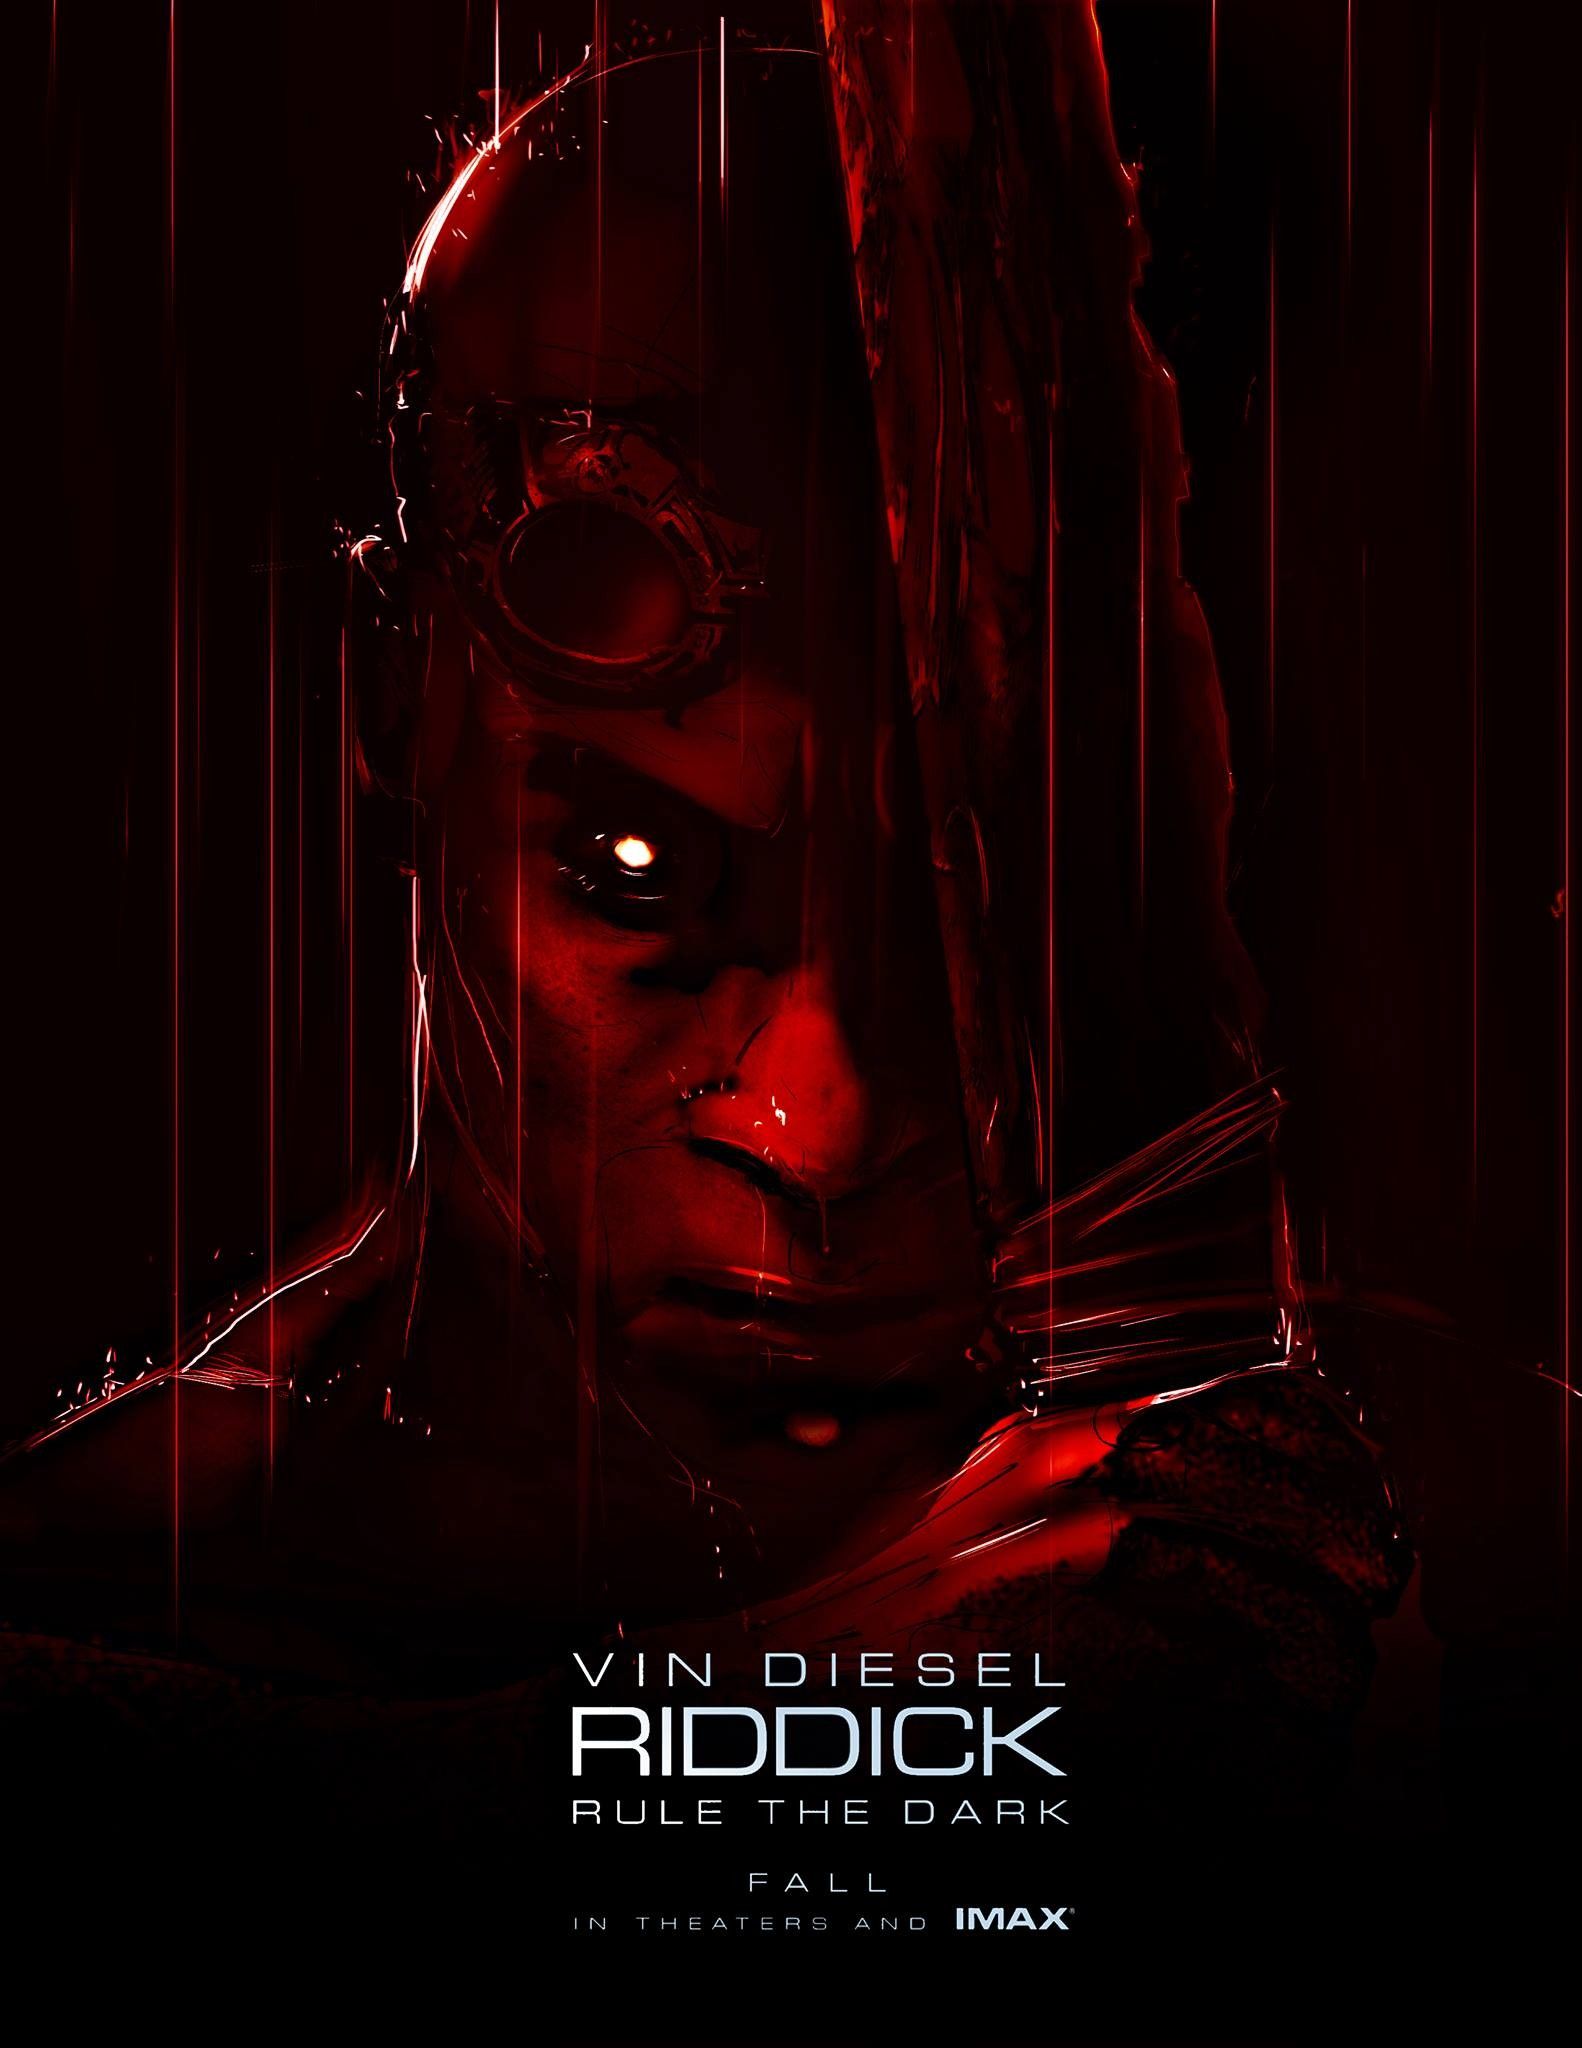 Riddick Comic-Con 2013 poster